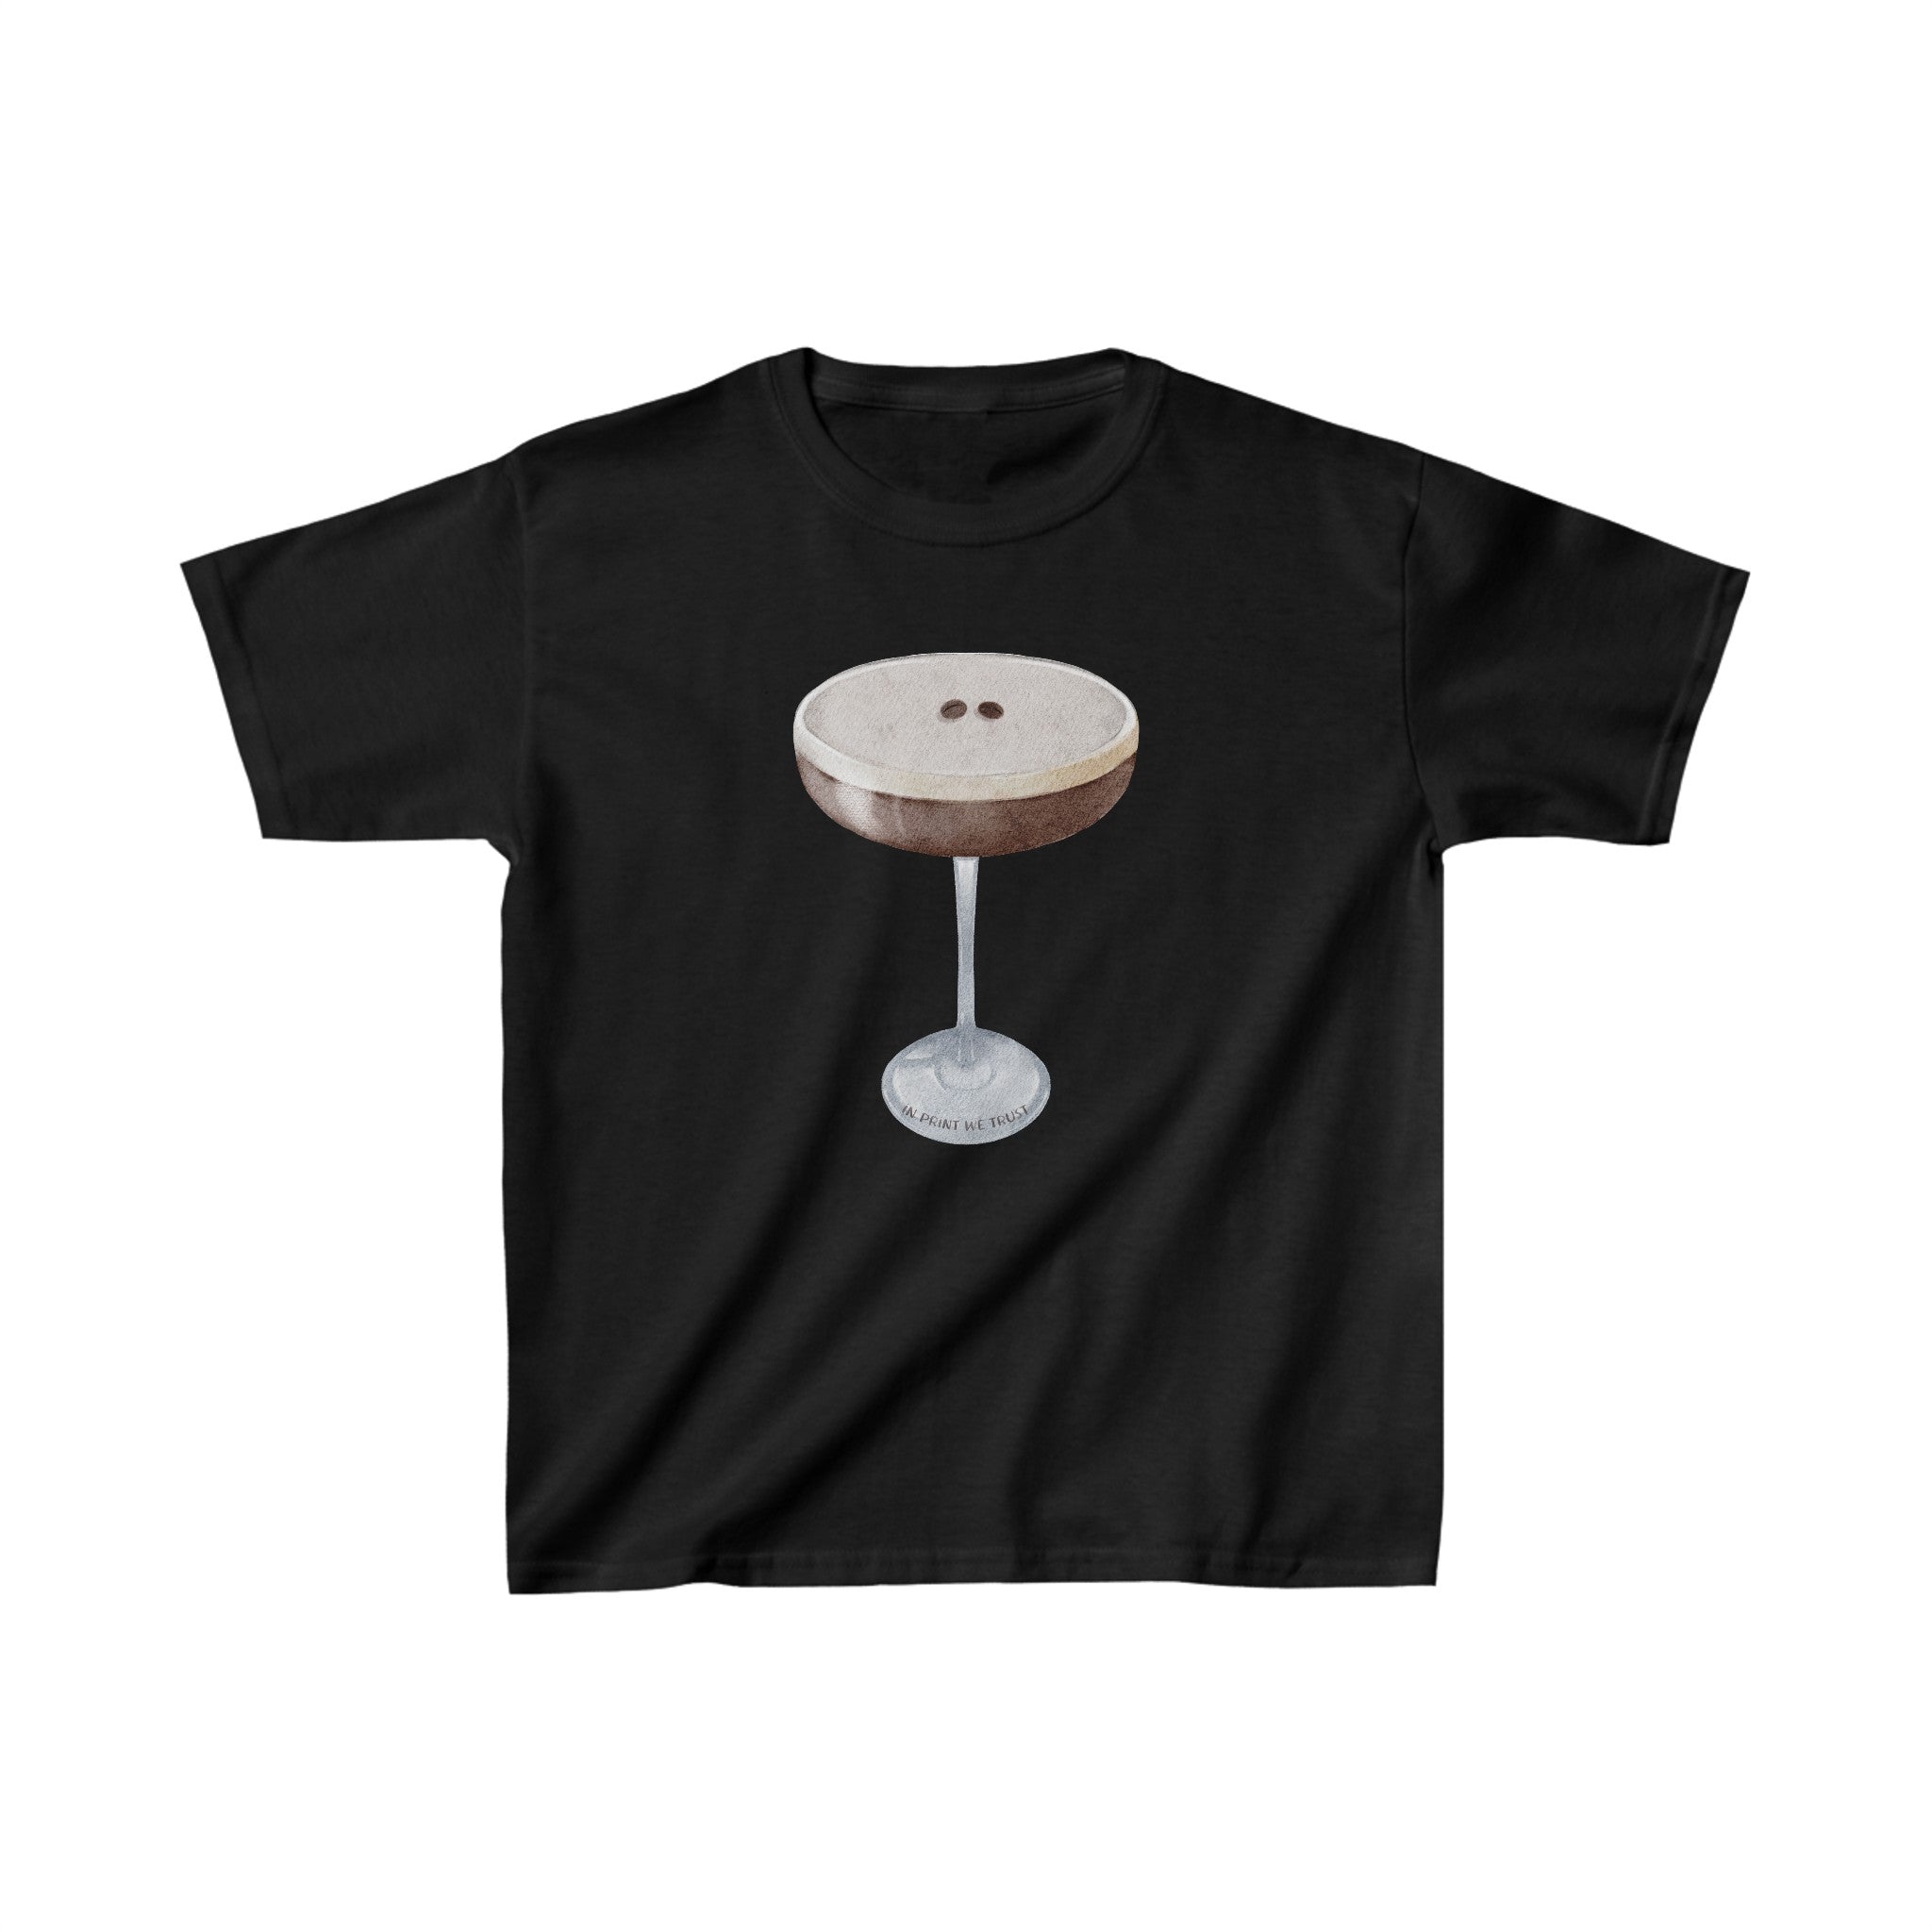 'Espresso Martini' baby tee - In Print We Trust